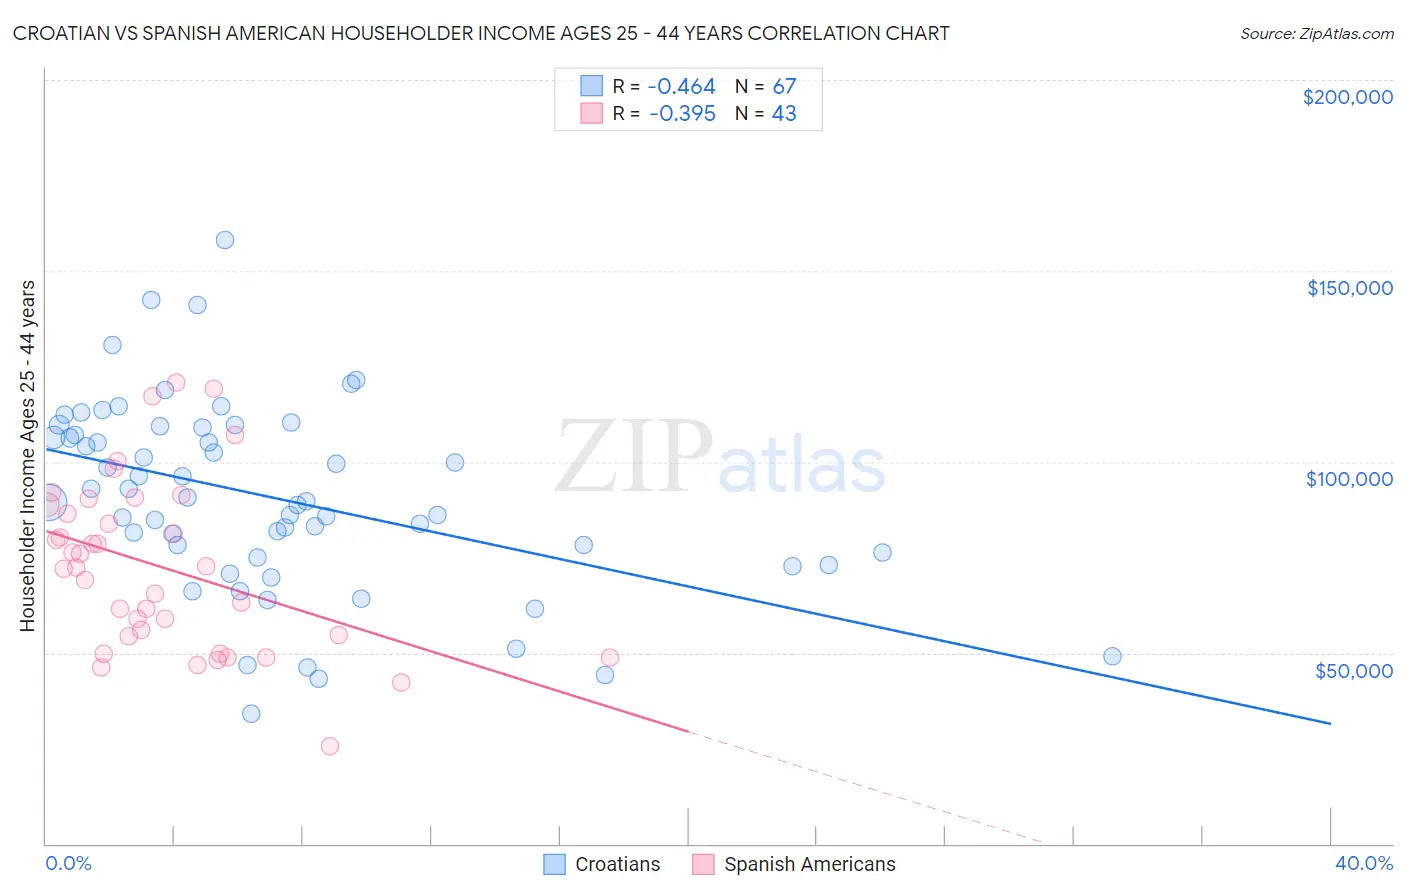 Croatian vs Spanish American Householder Income Ages 25 - 44 years